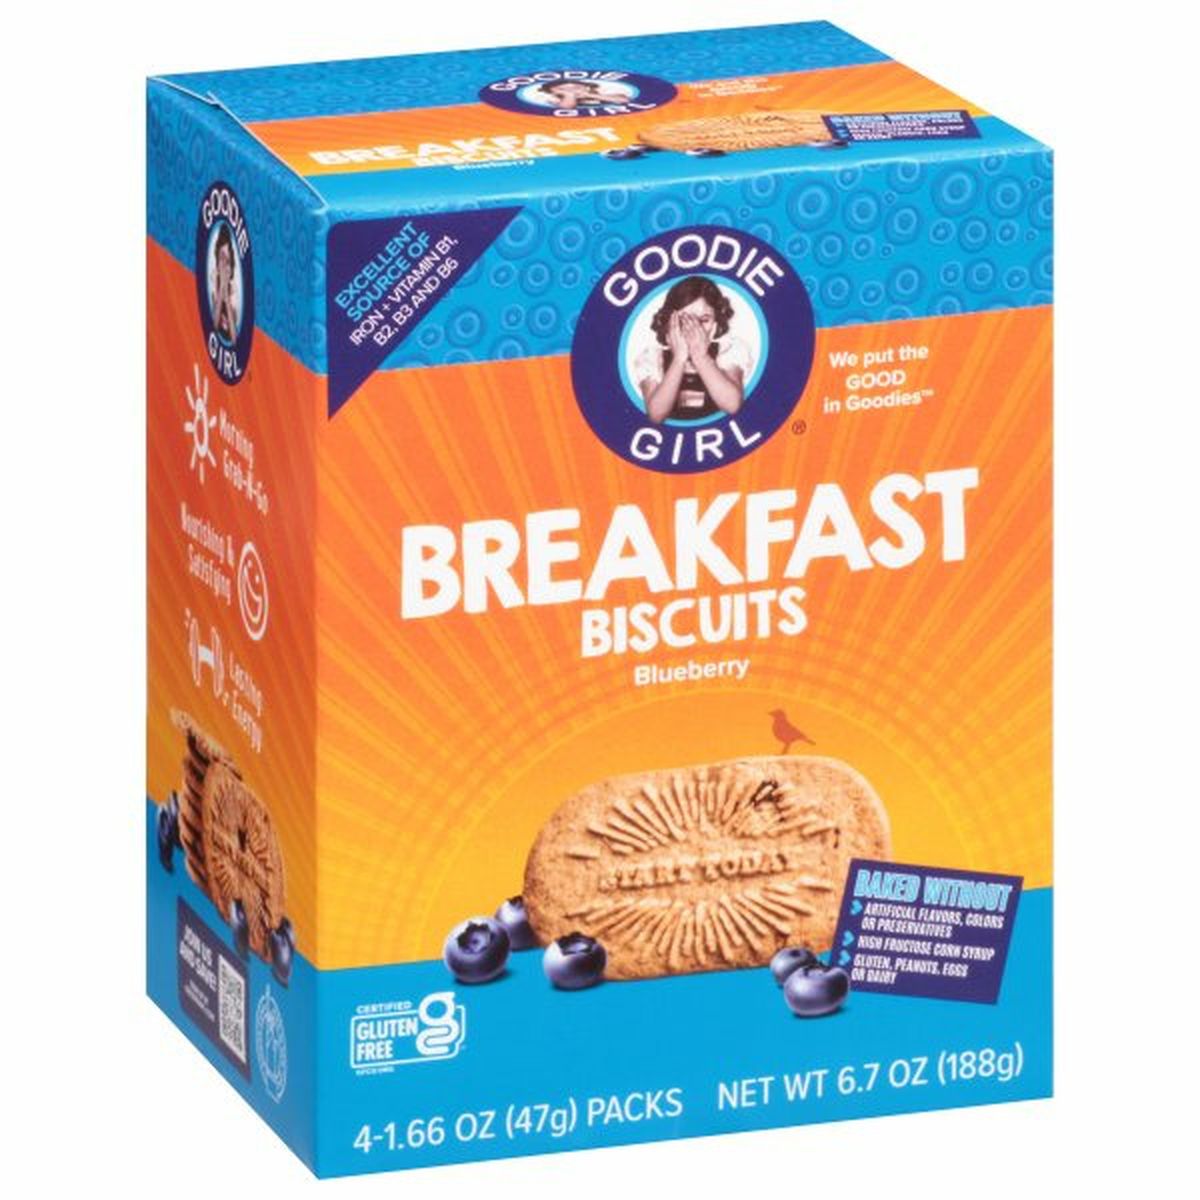 Calories in Goodie Girl Cookies Breakfast Biscuits, Blueberry